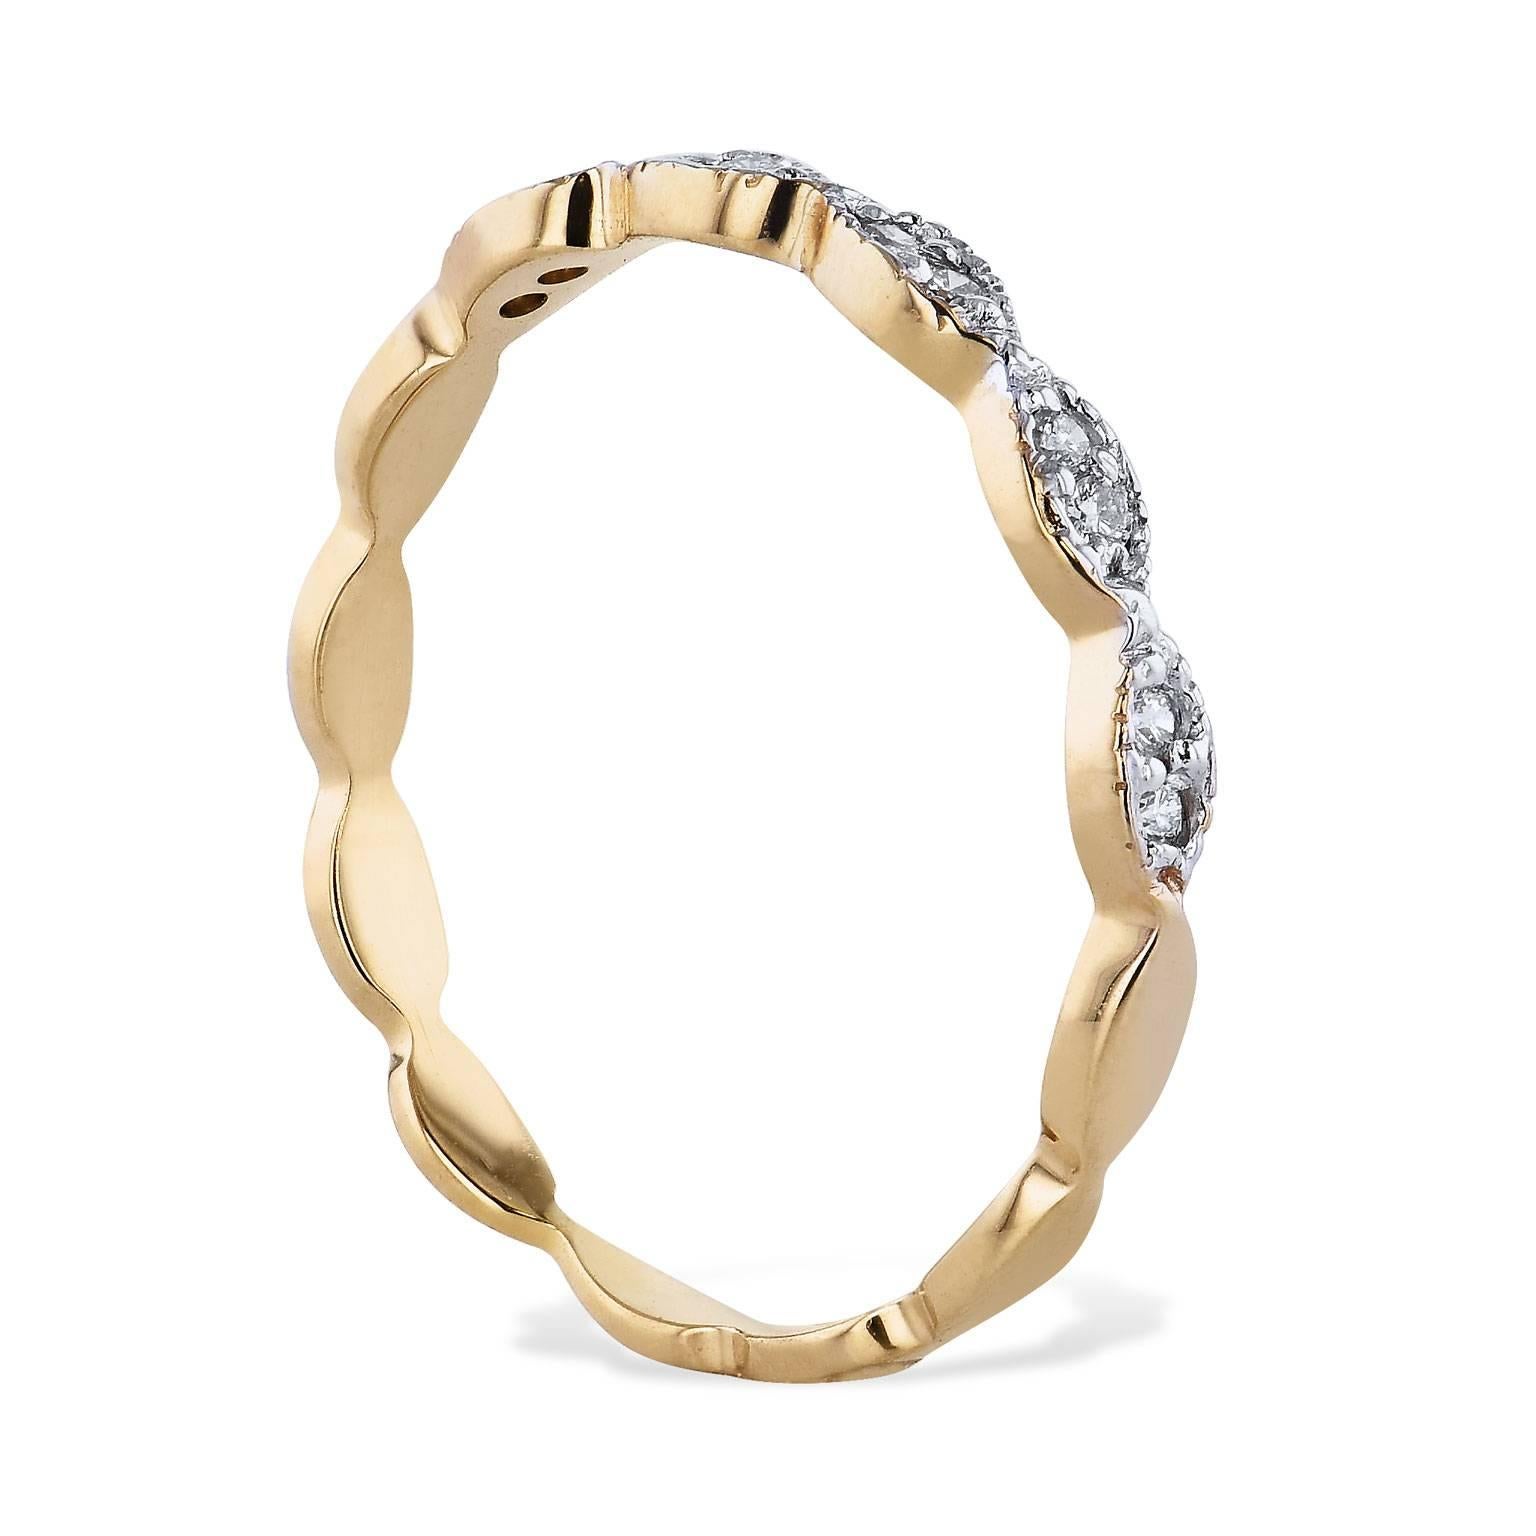 Interlocking ovals featuring 0.08 carat of diamond evoke a sense of movement in this 14 karat yellow gold diamond band (size 6.5).